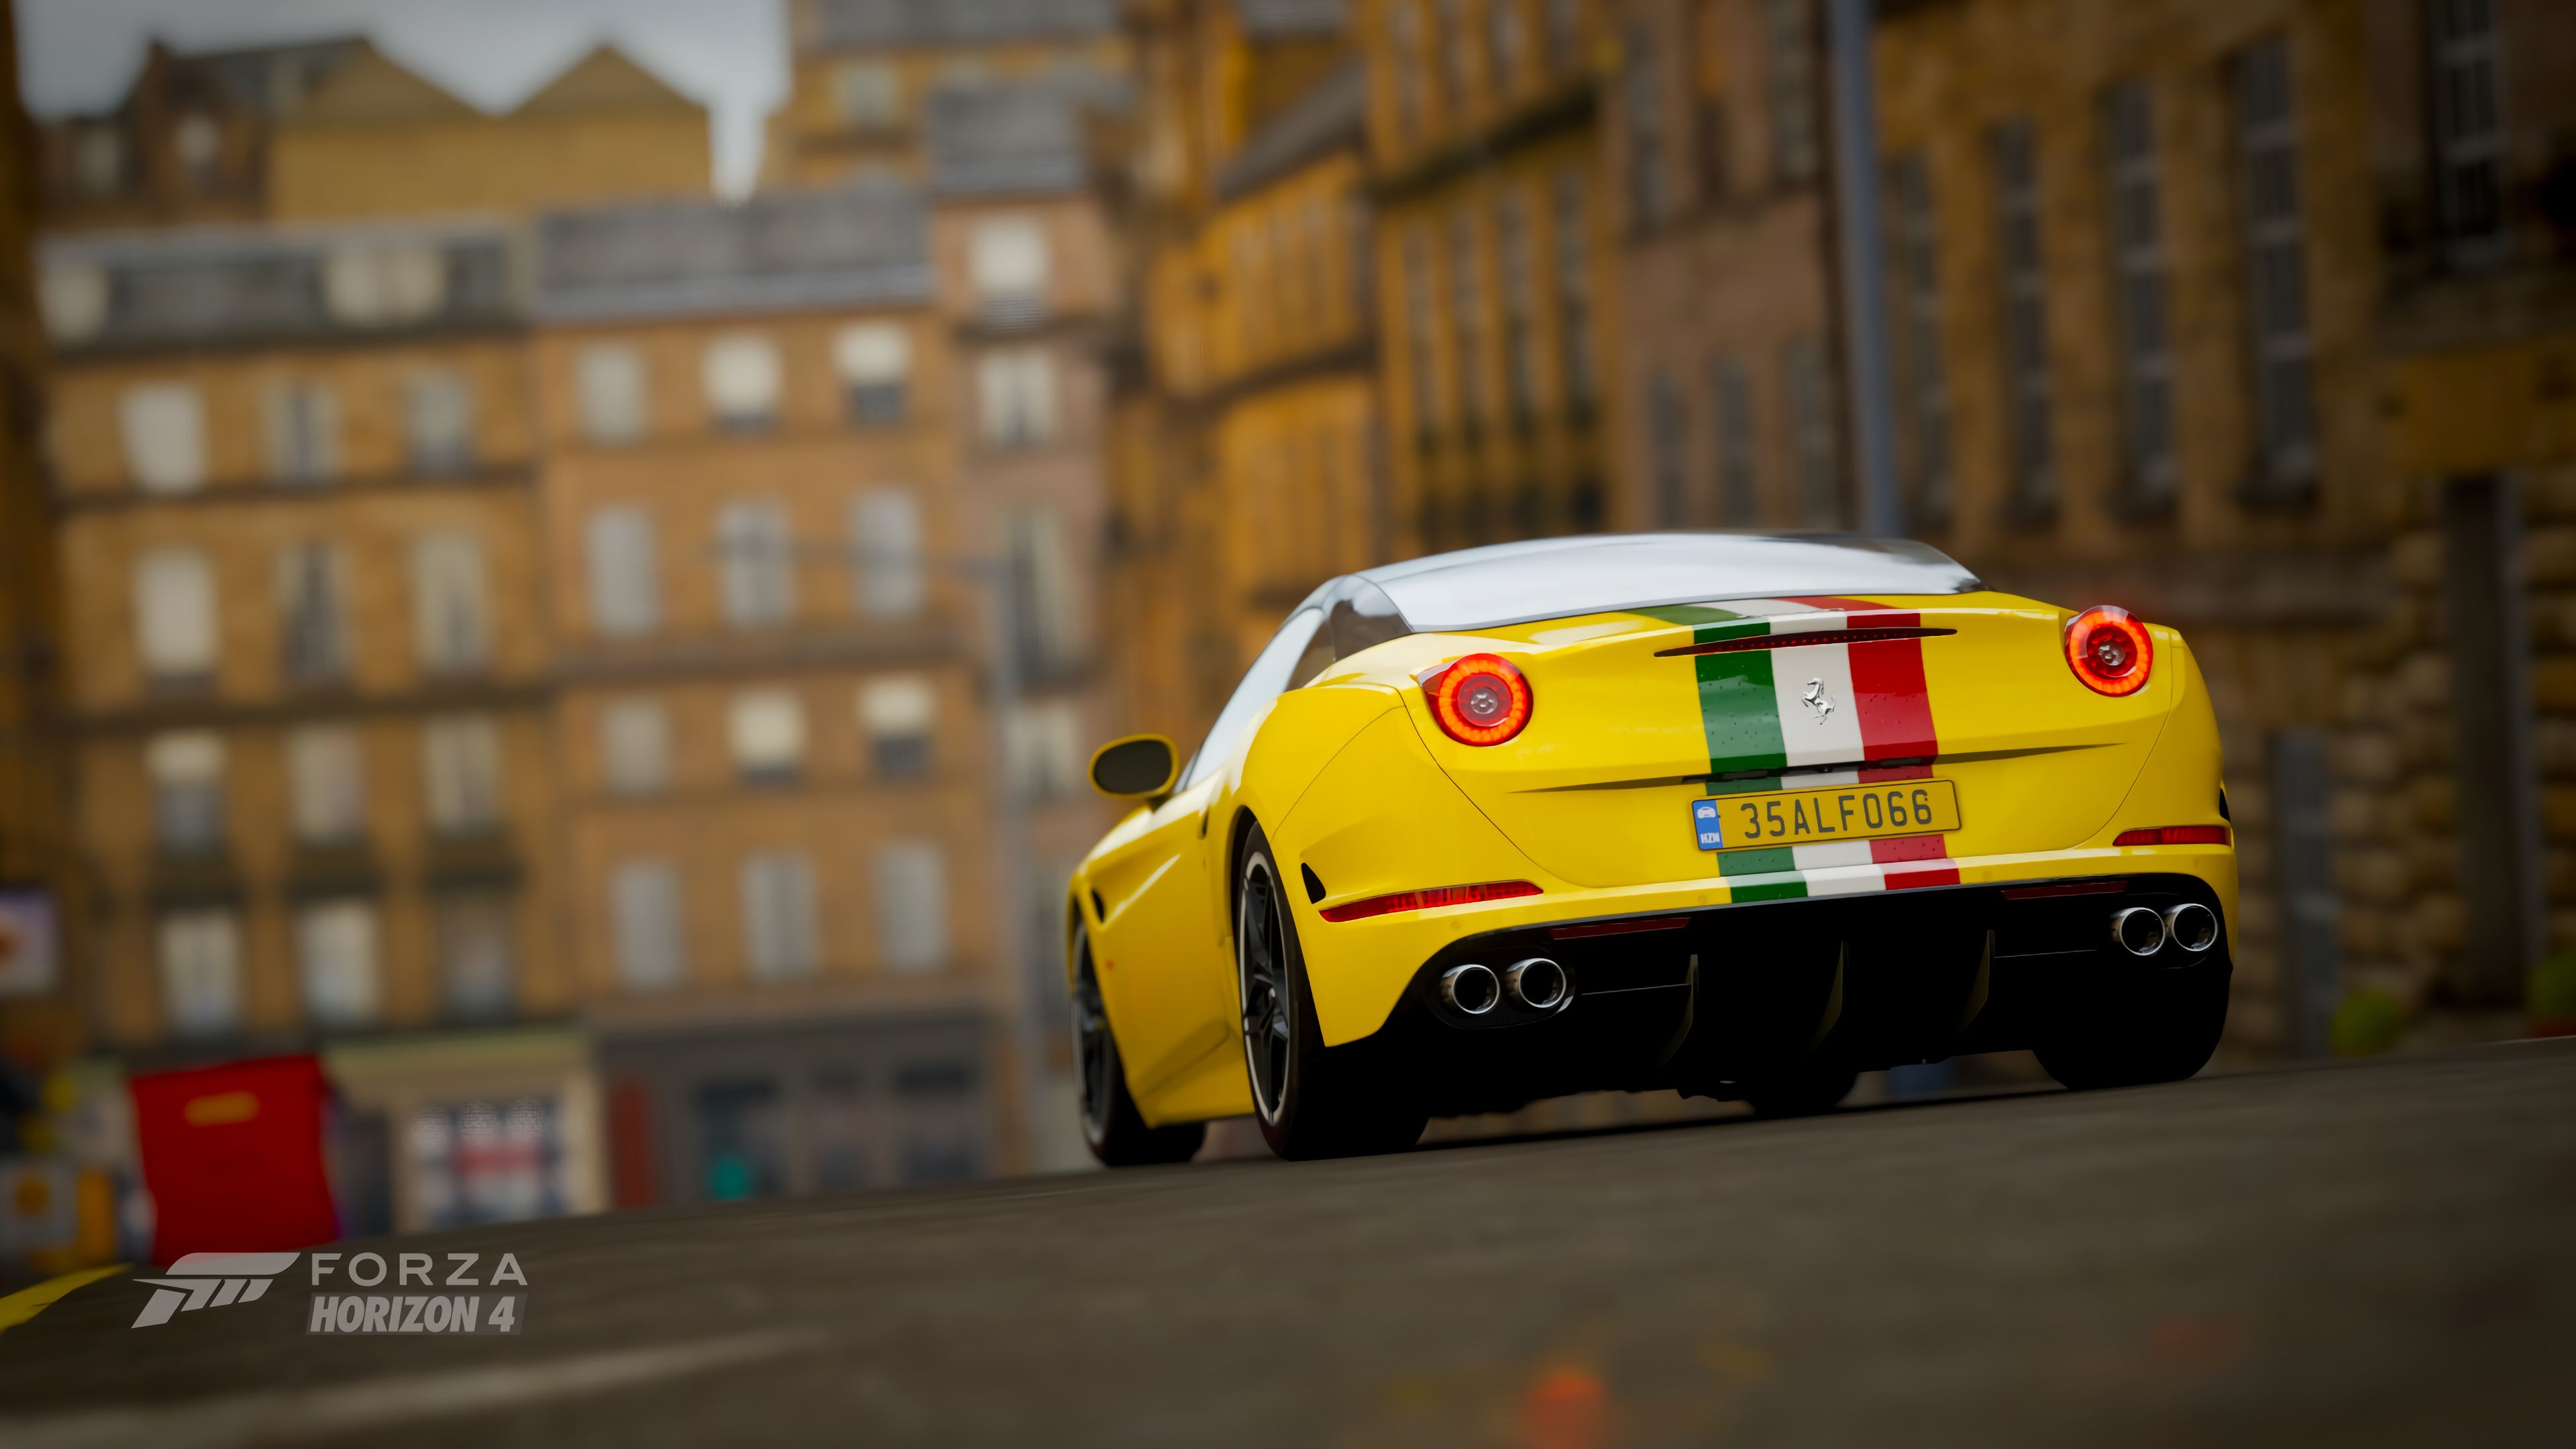 Descarga gratis la imagen Ferrari, Fuerza, Ferrari California, Videojuego, Forza Horizon 4 en el escritorio de tu PC